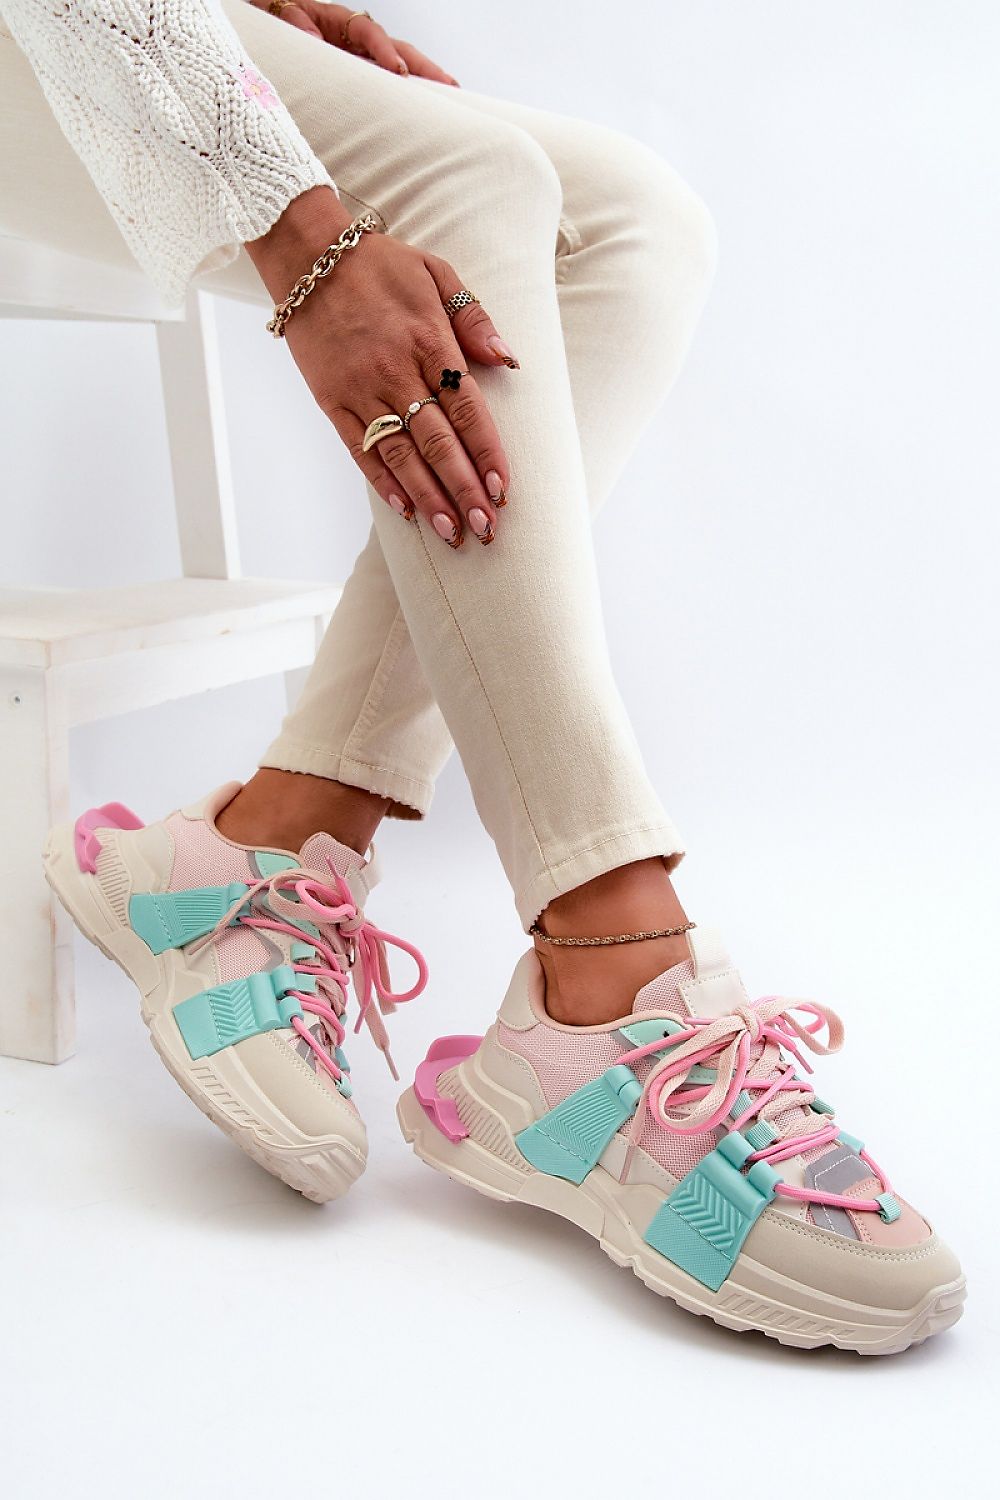 TEEK - Pink Aqua Strung Laced Sneakers SHOES TEEK MH 5.5  